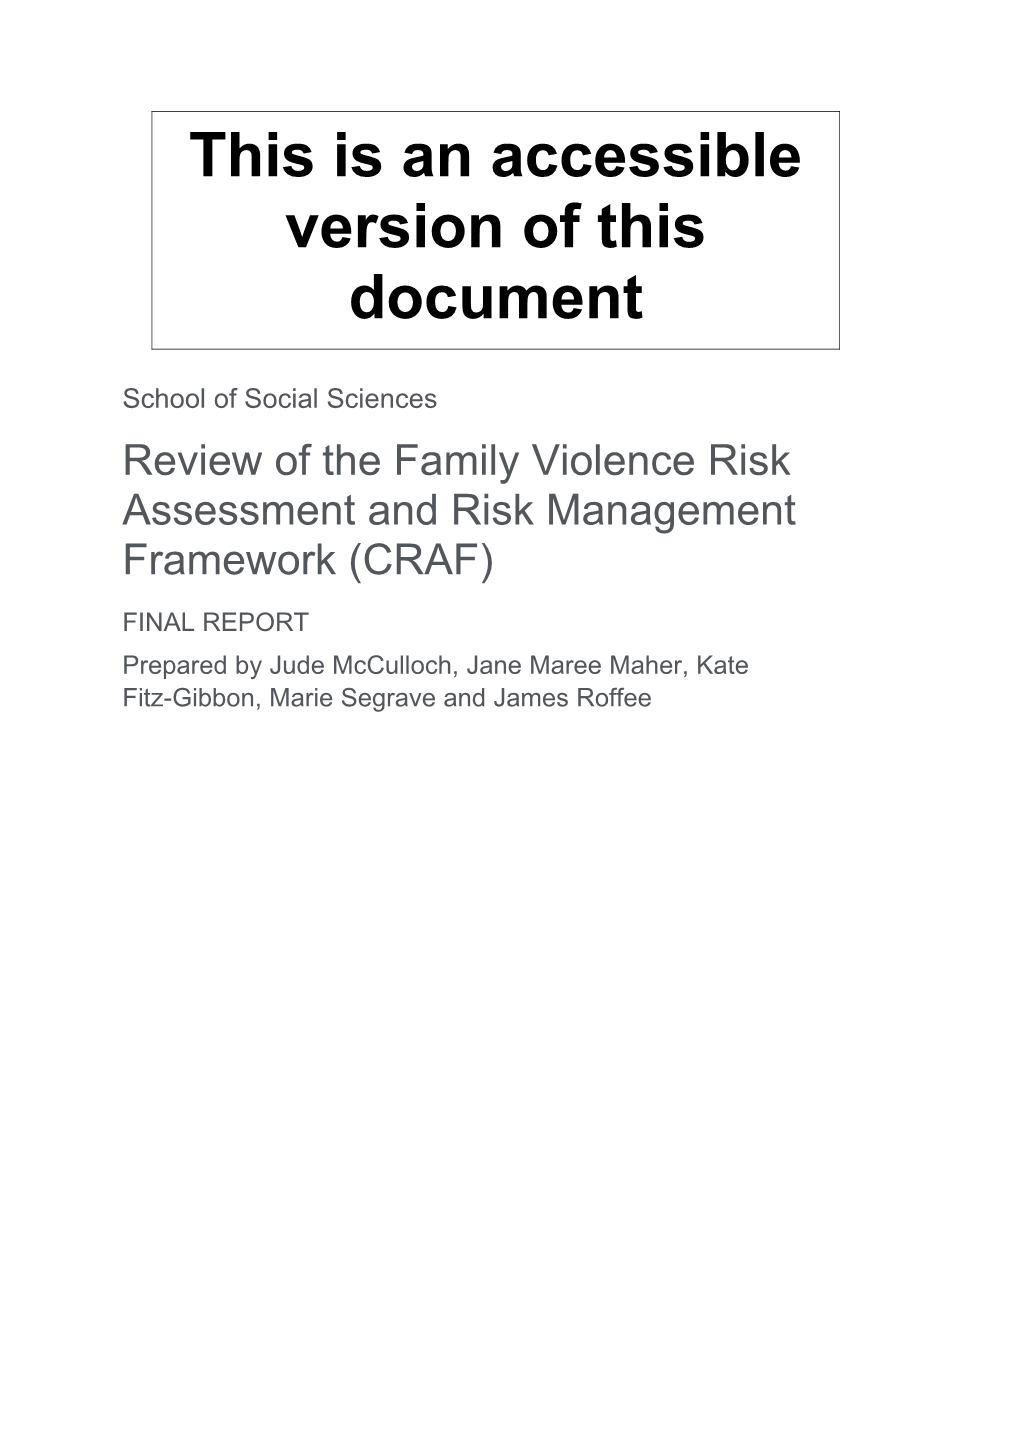 Review of the Family Violence Risk Assessment and Risk Management Framework (CRAF)